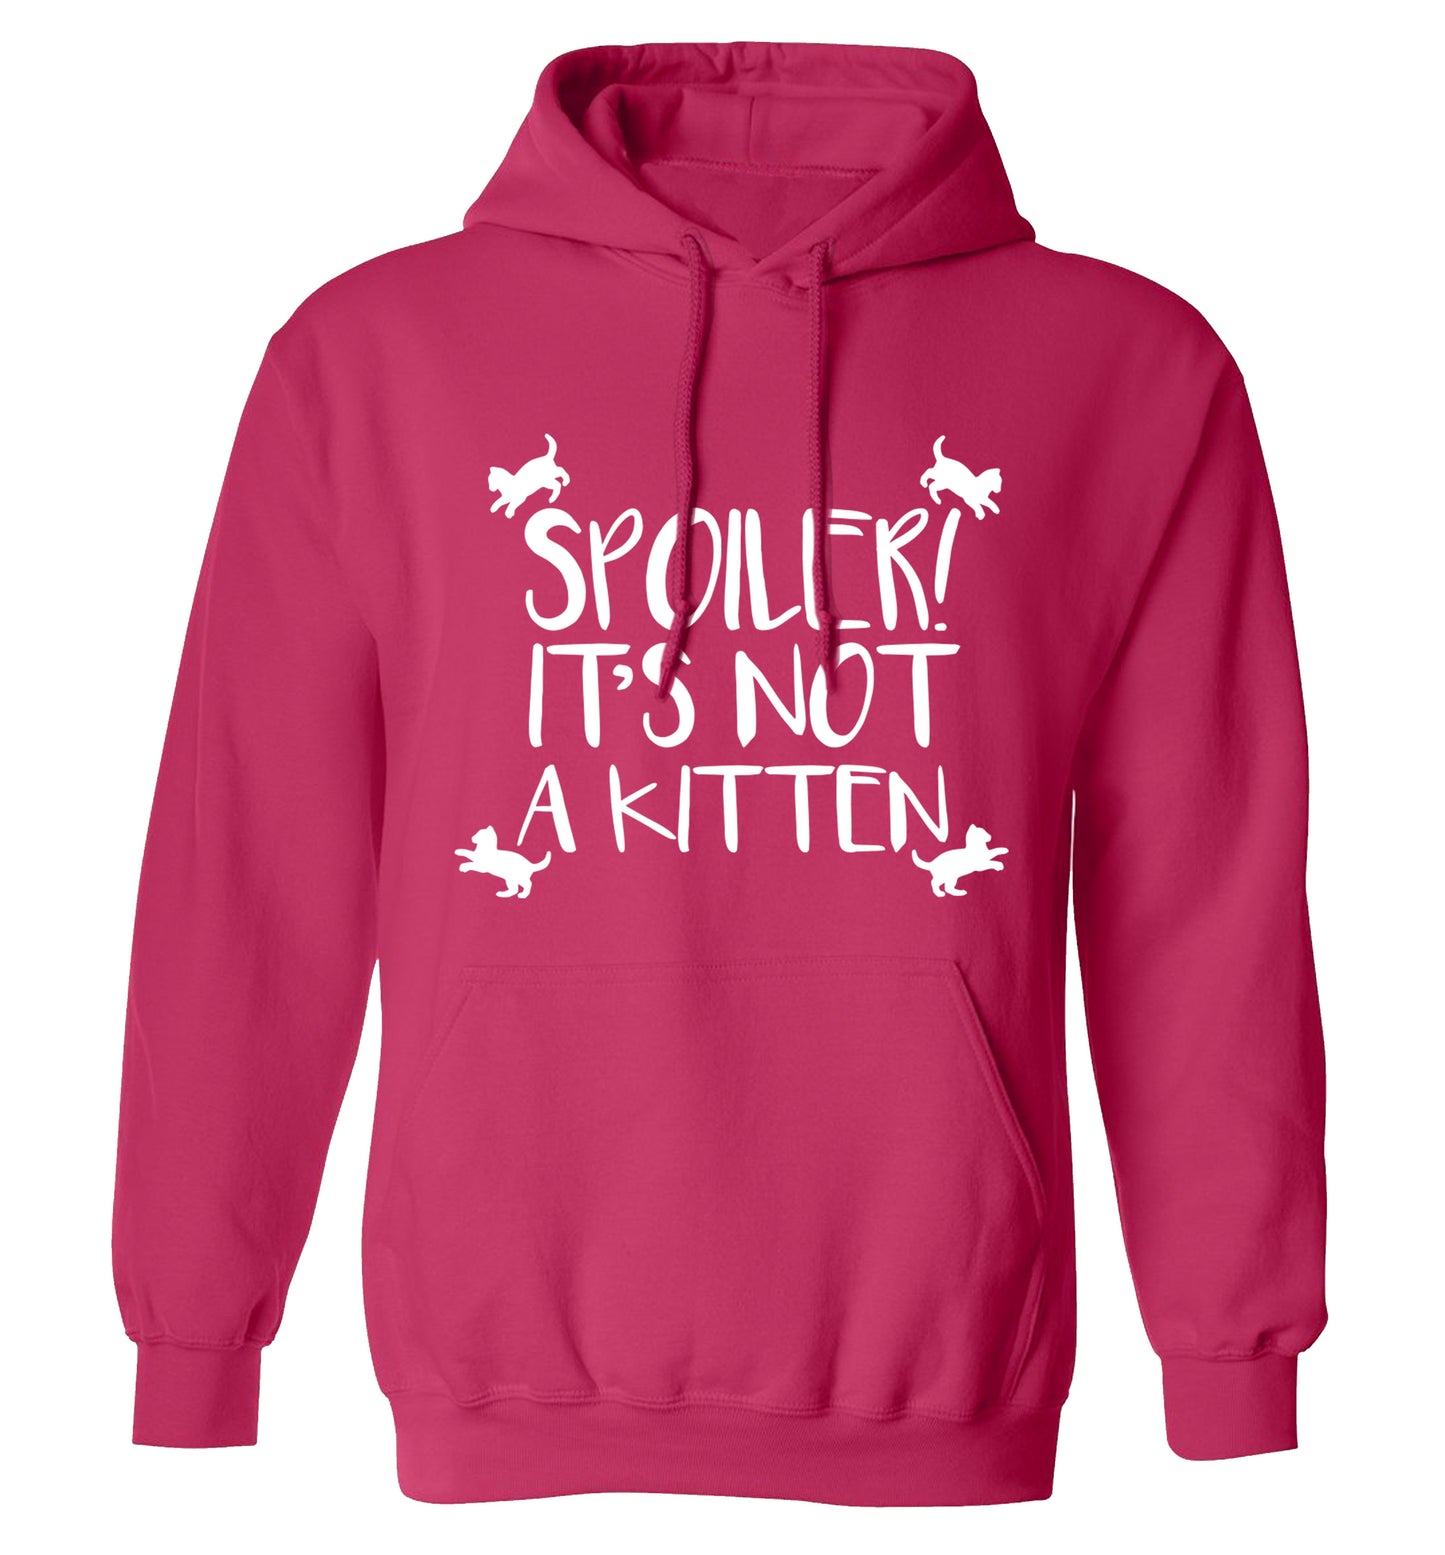 Spoiler it's not a kitten adults unisex pink hoodie 2XL